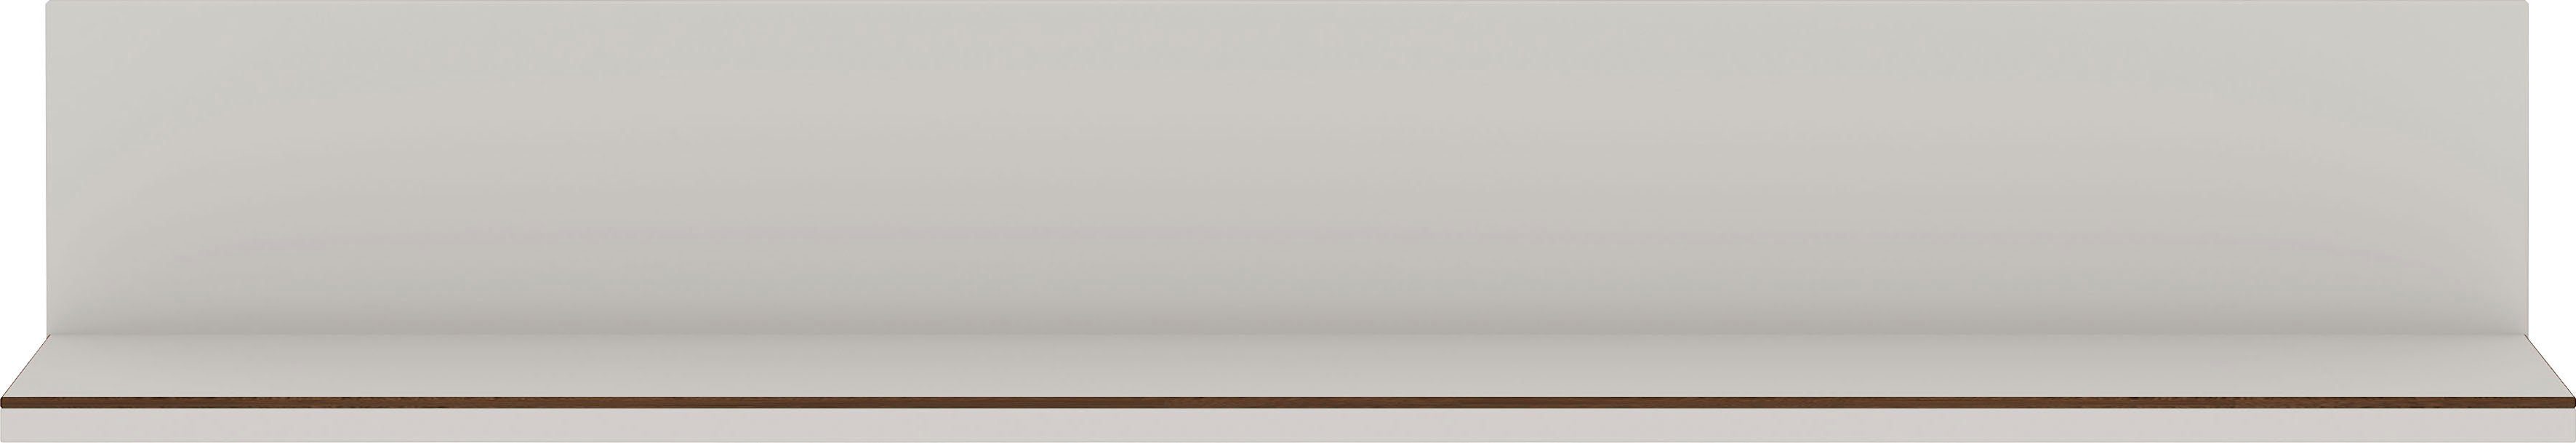 GERMANIA Wandboard California, Breite 164 cm, Dual-Kante mit filigraner